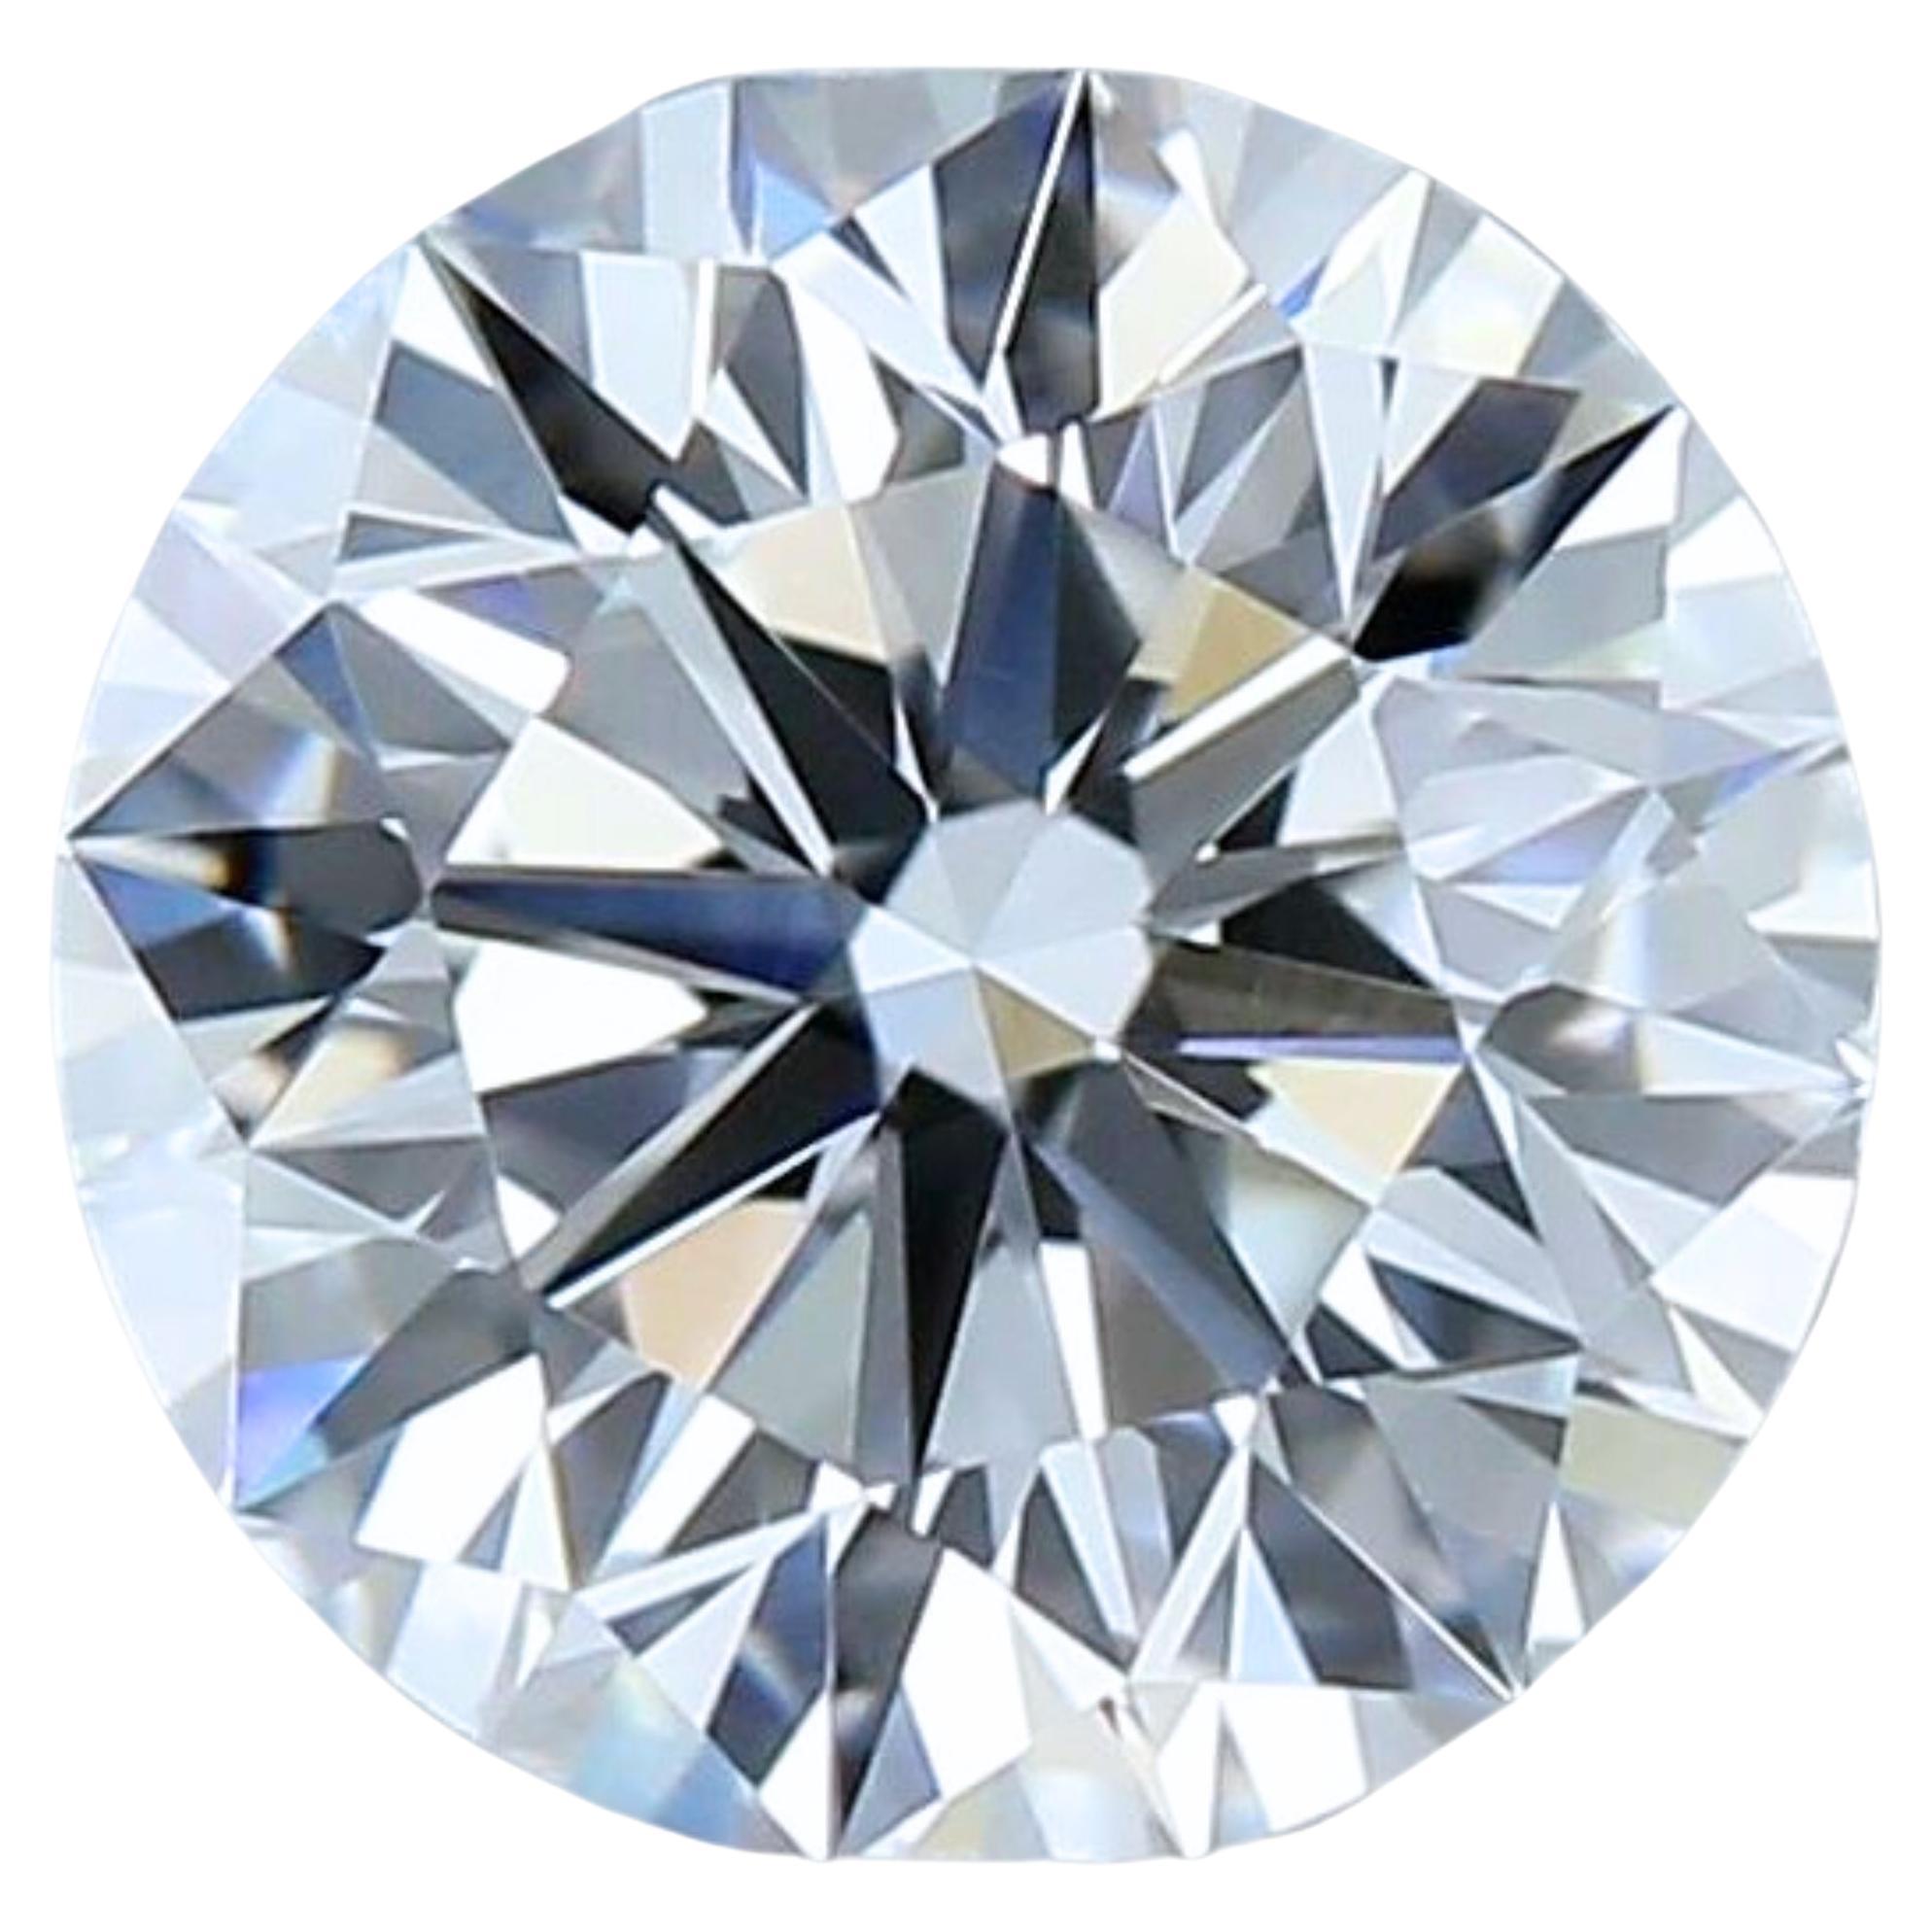 1pc Glamorous Natural cut Round diamond in a .61 carat 